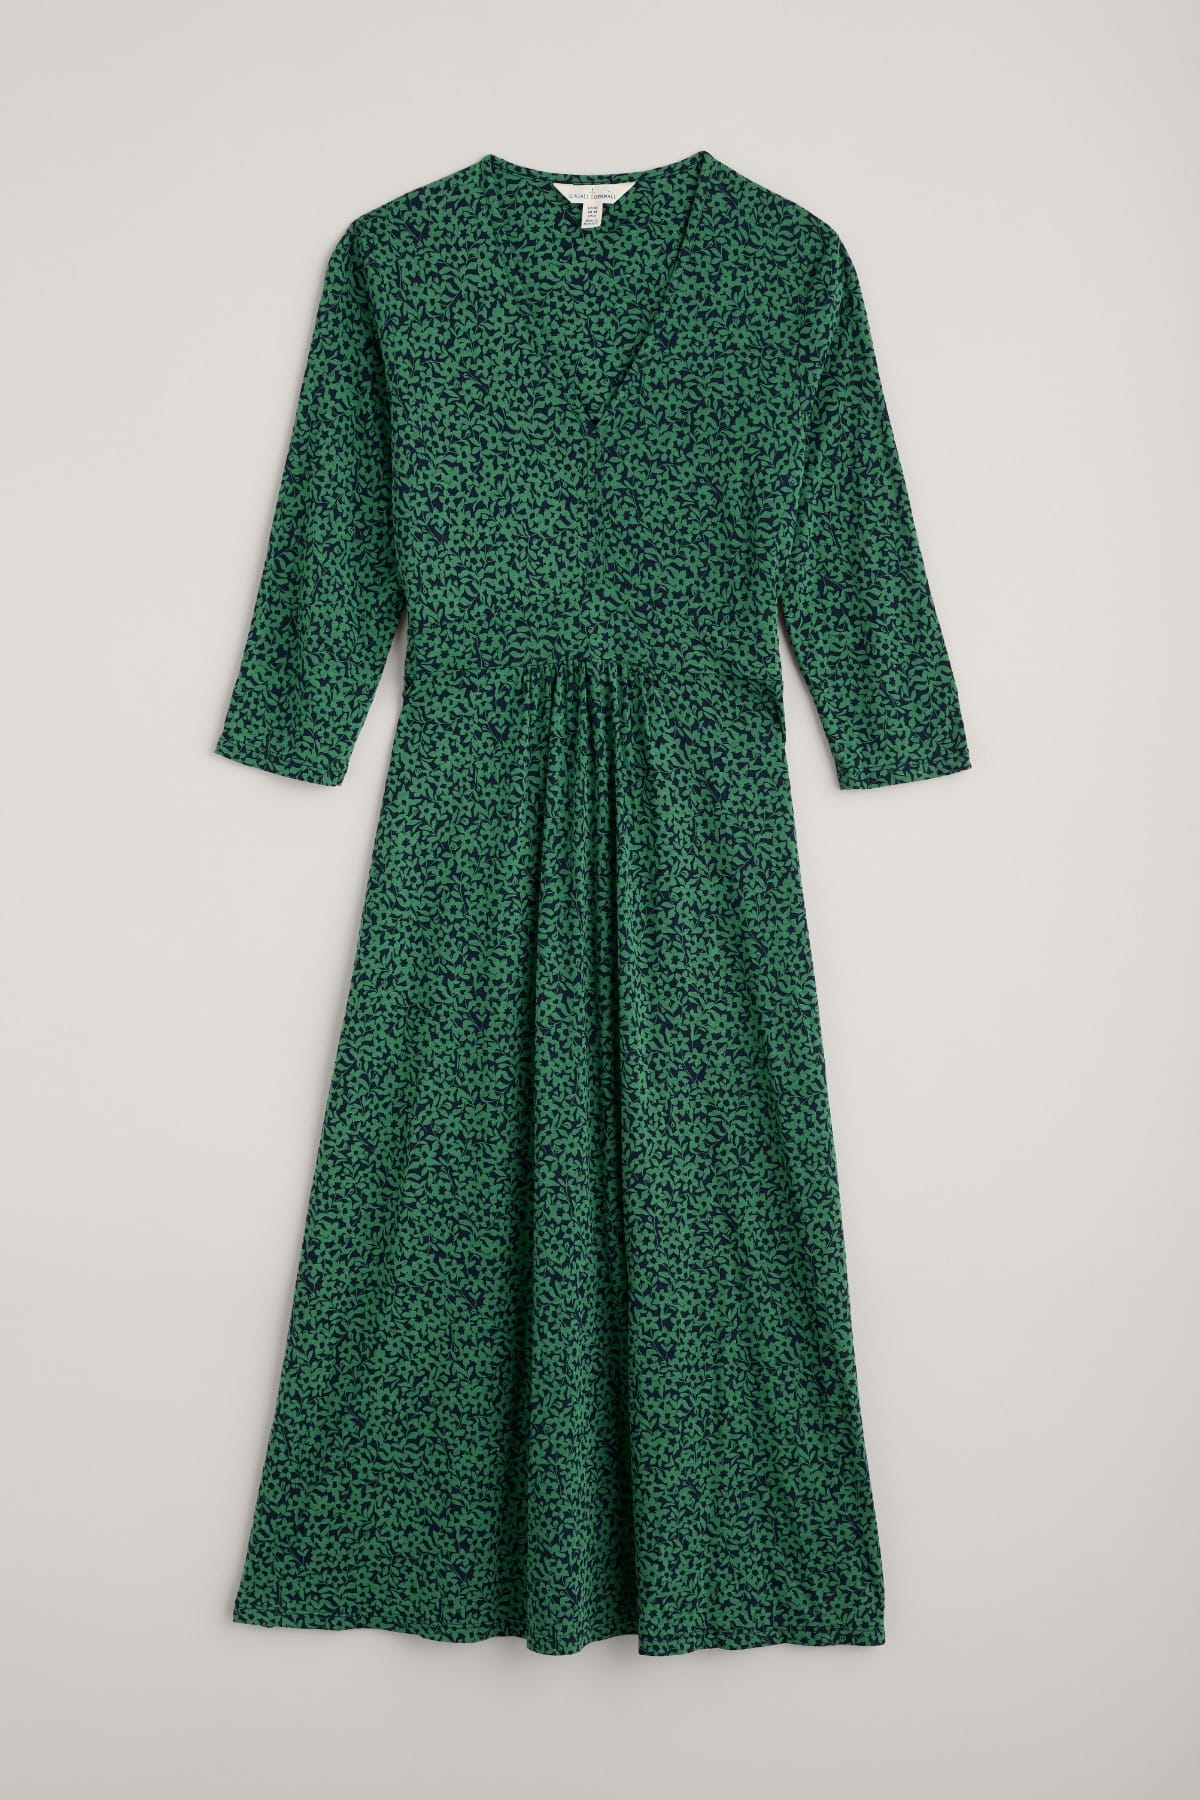 Kleid Carwynnen Ditsy ⋆ Bella Nachhaltige ⋆ Mode Green